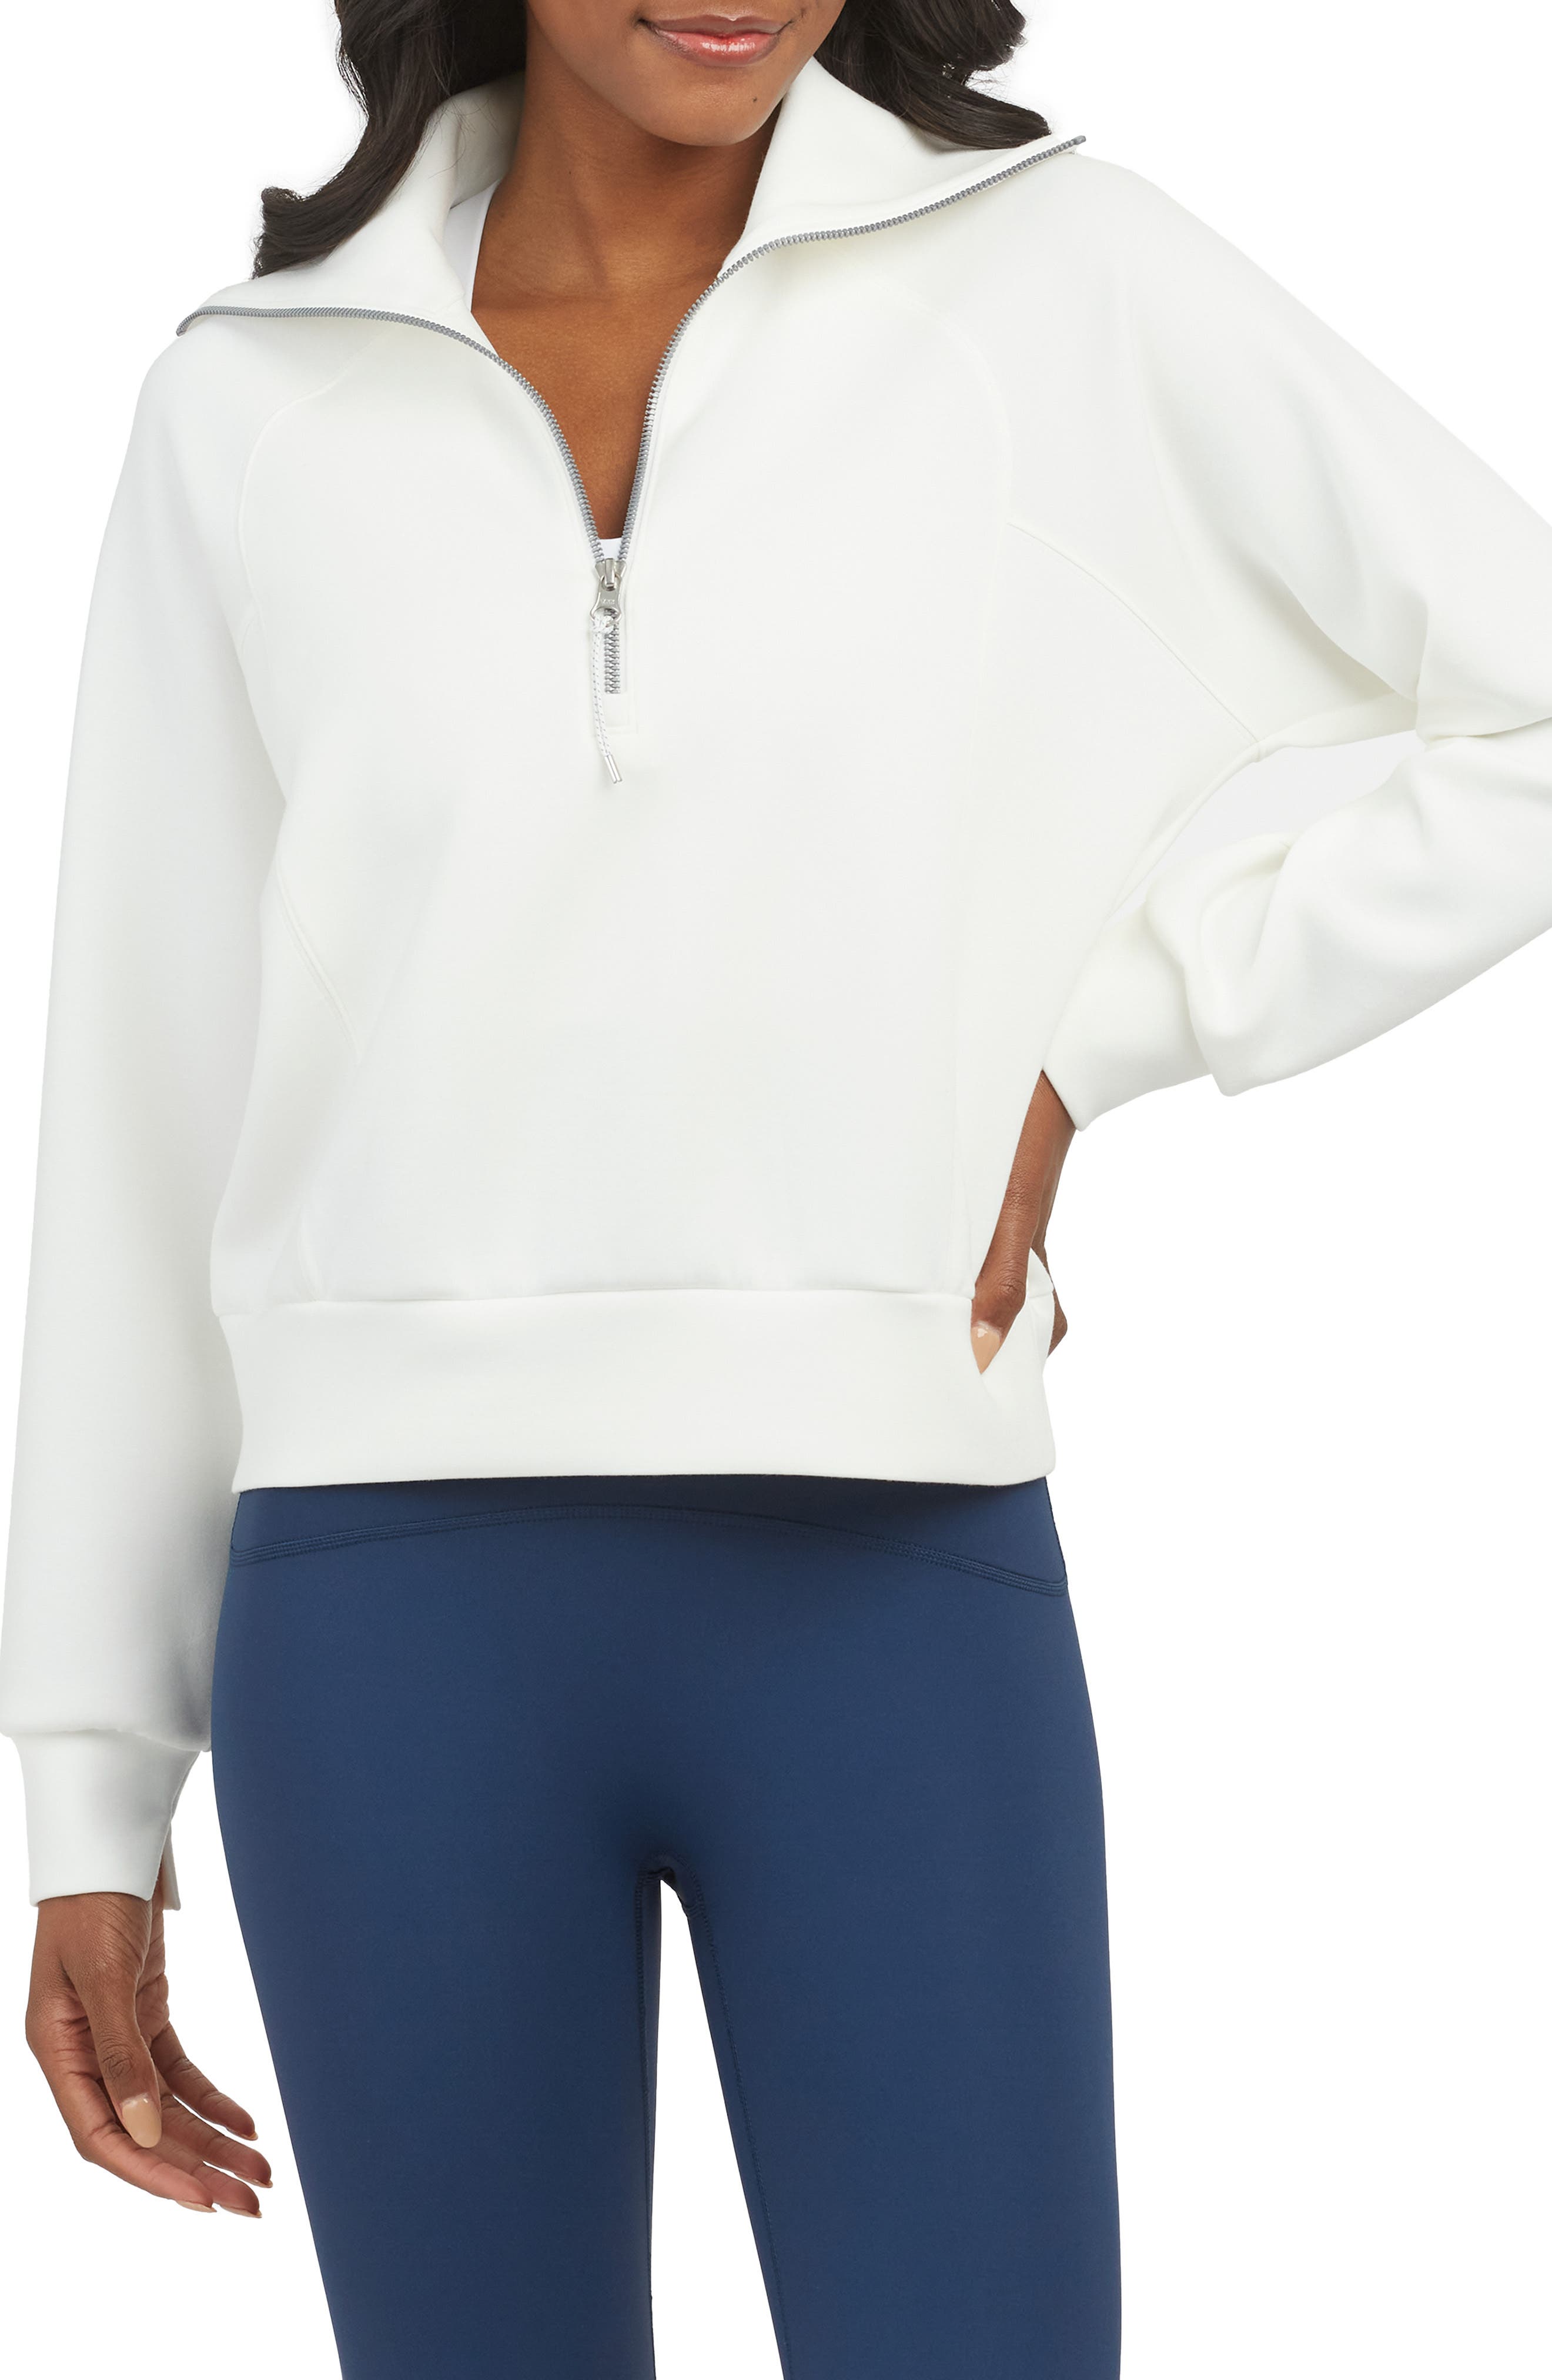 discount 92% Quechua sweatshirt WOMEN FASHION Jumpers & Sweatshirts Fleece Blue S 